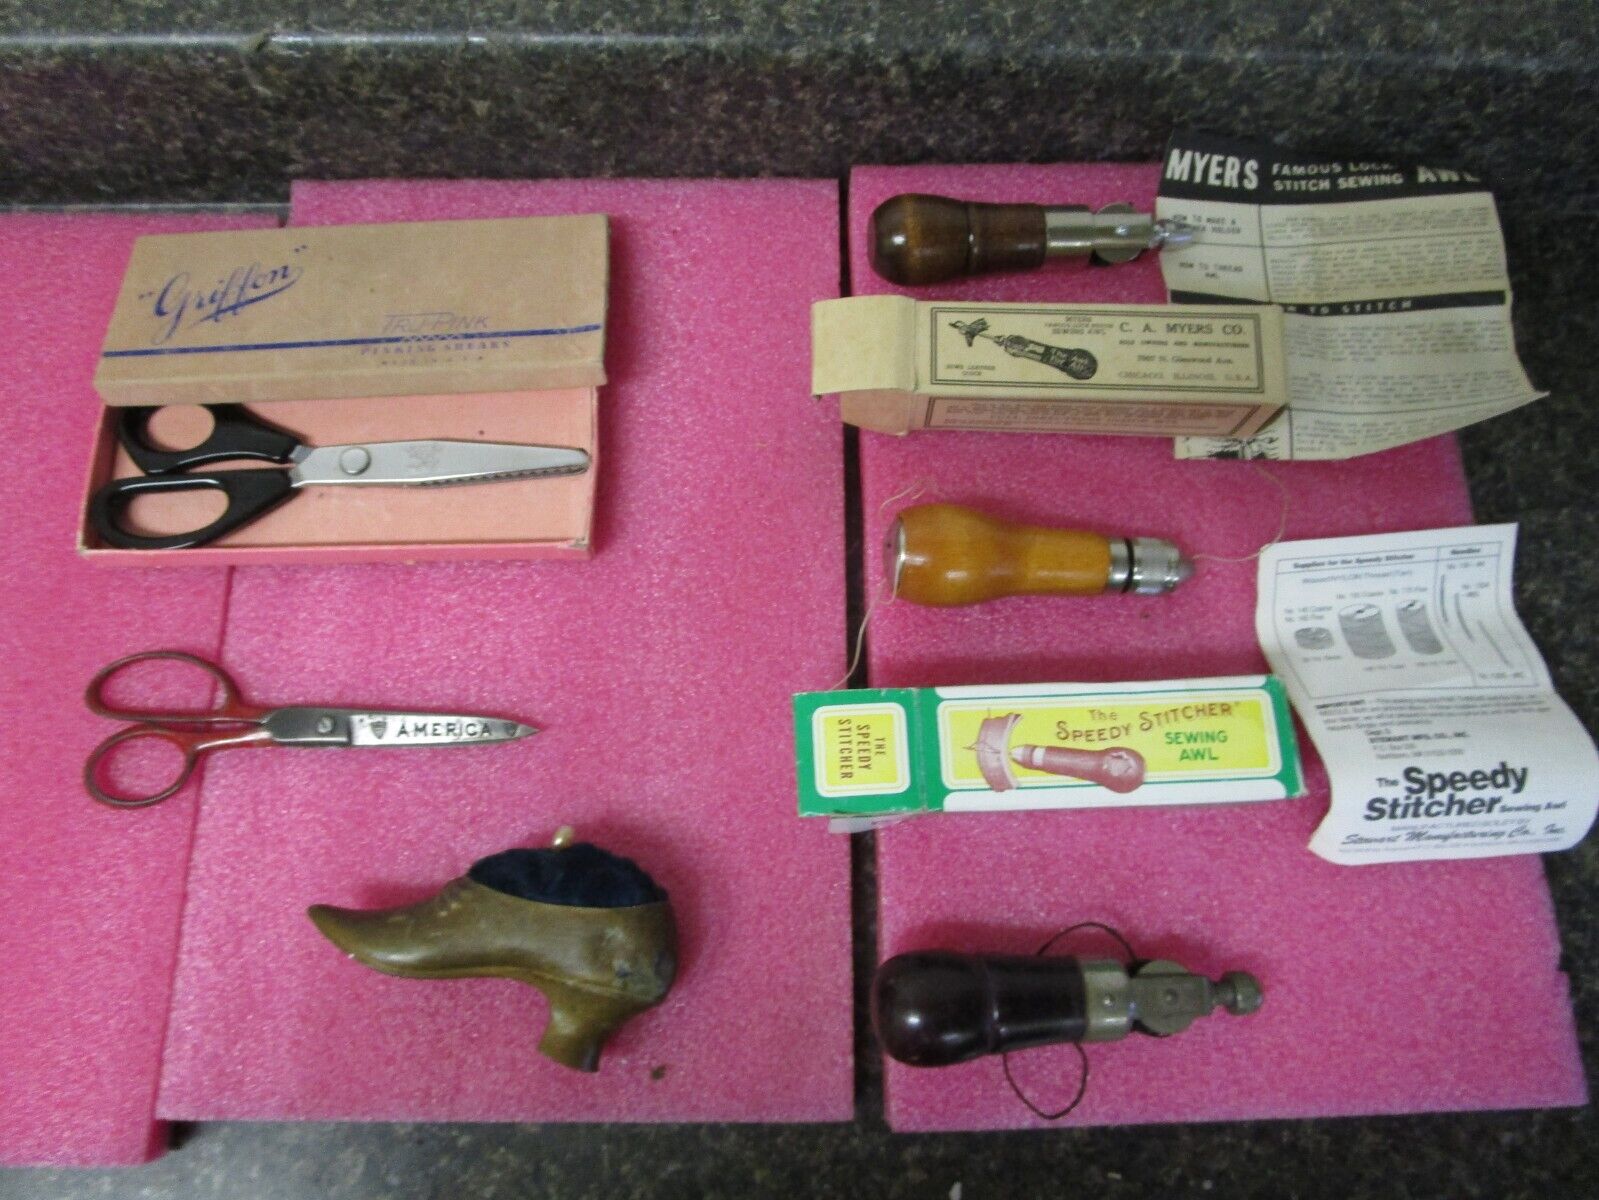 Vintage Sewing Lot - Pin Cushion Shoe Speedy Stitcher Awl  C.A. Myers, Scissors